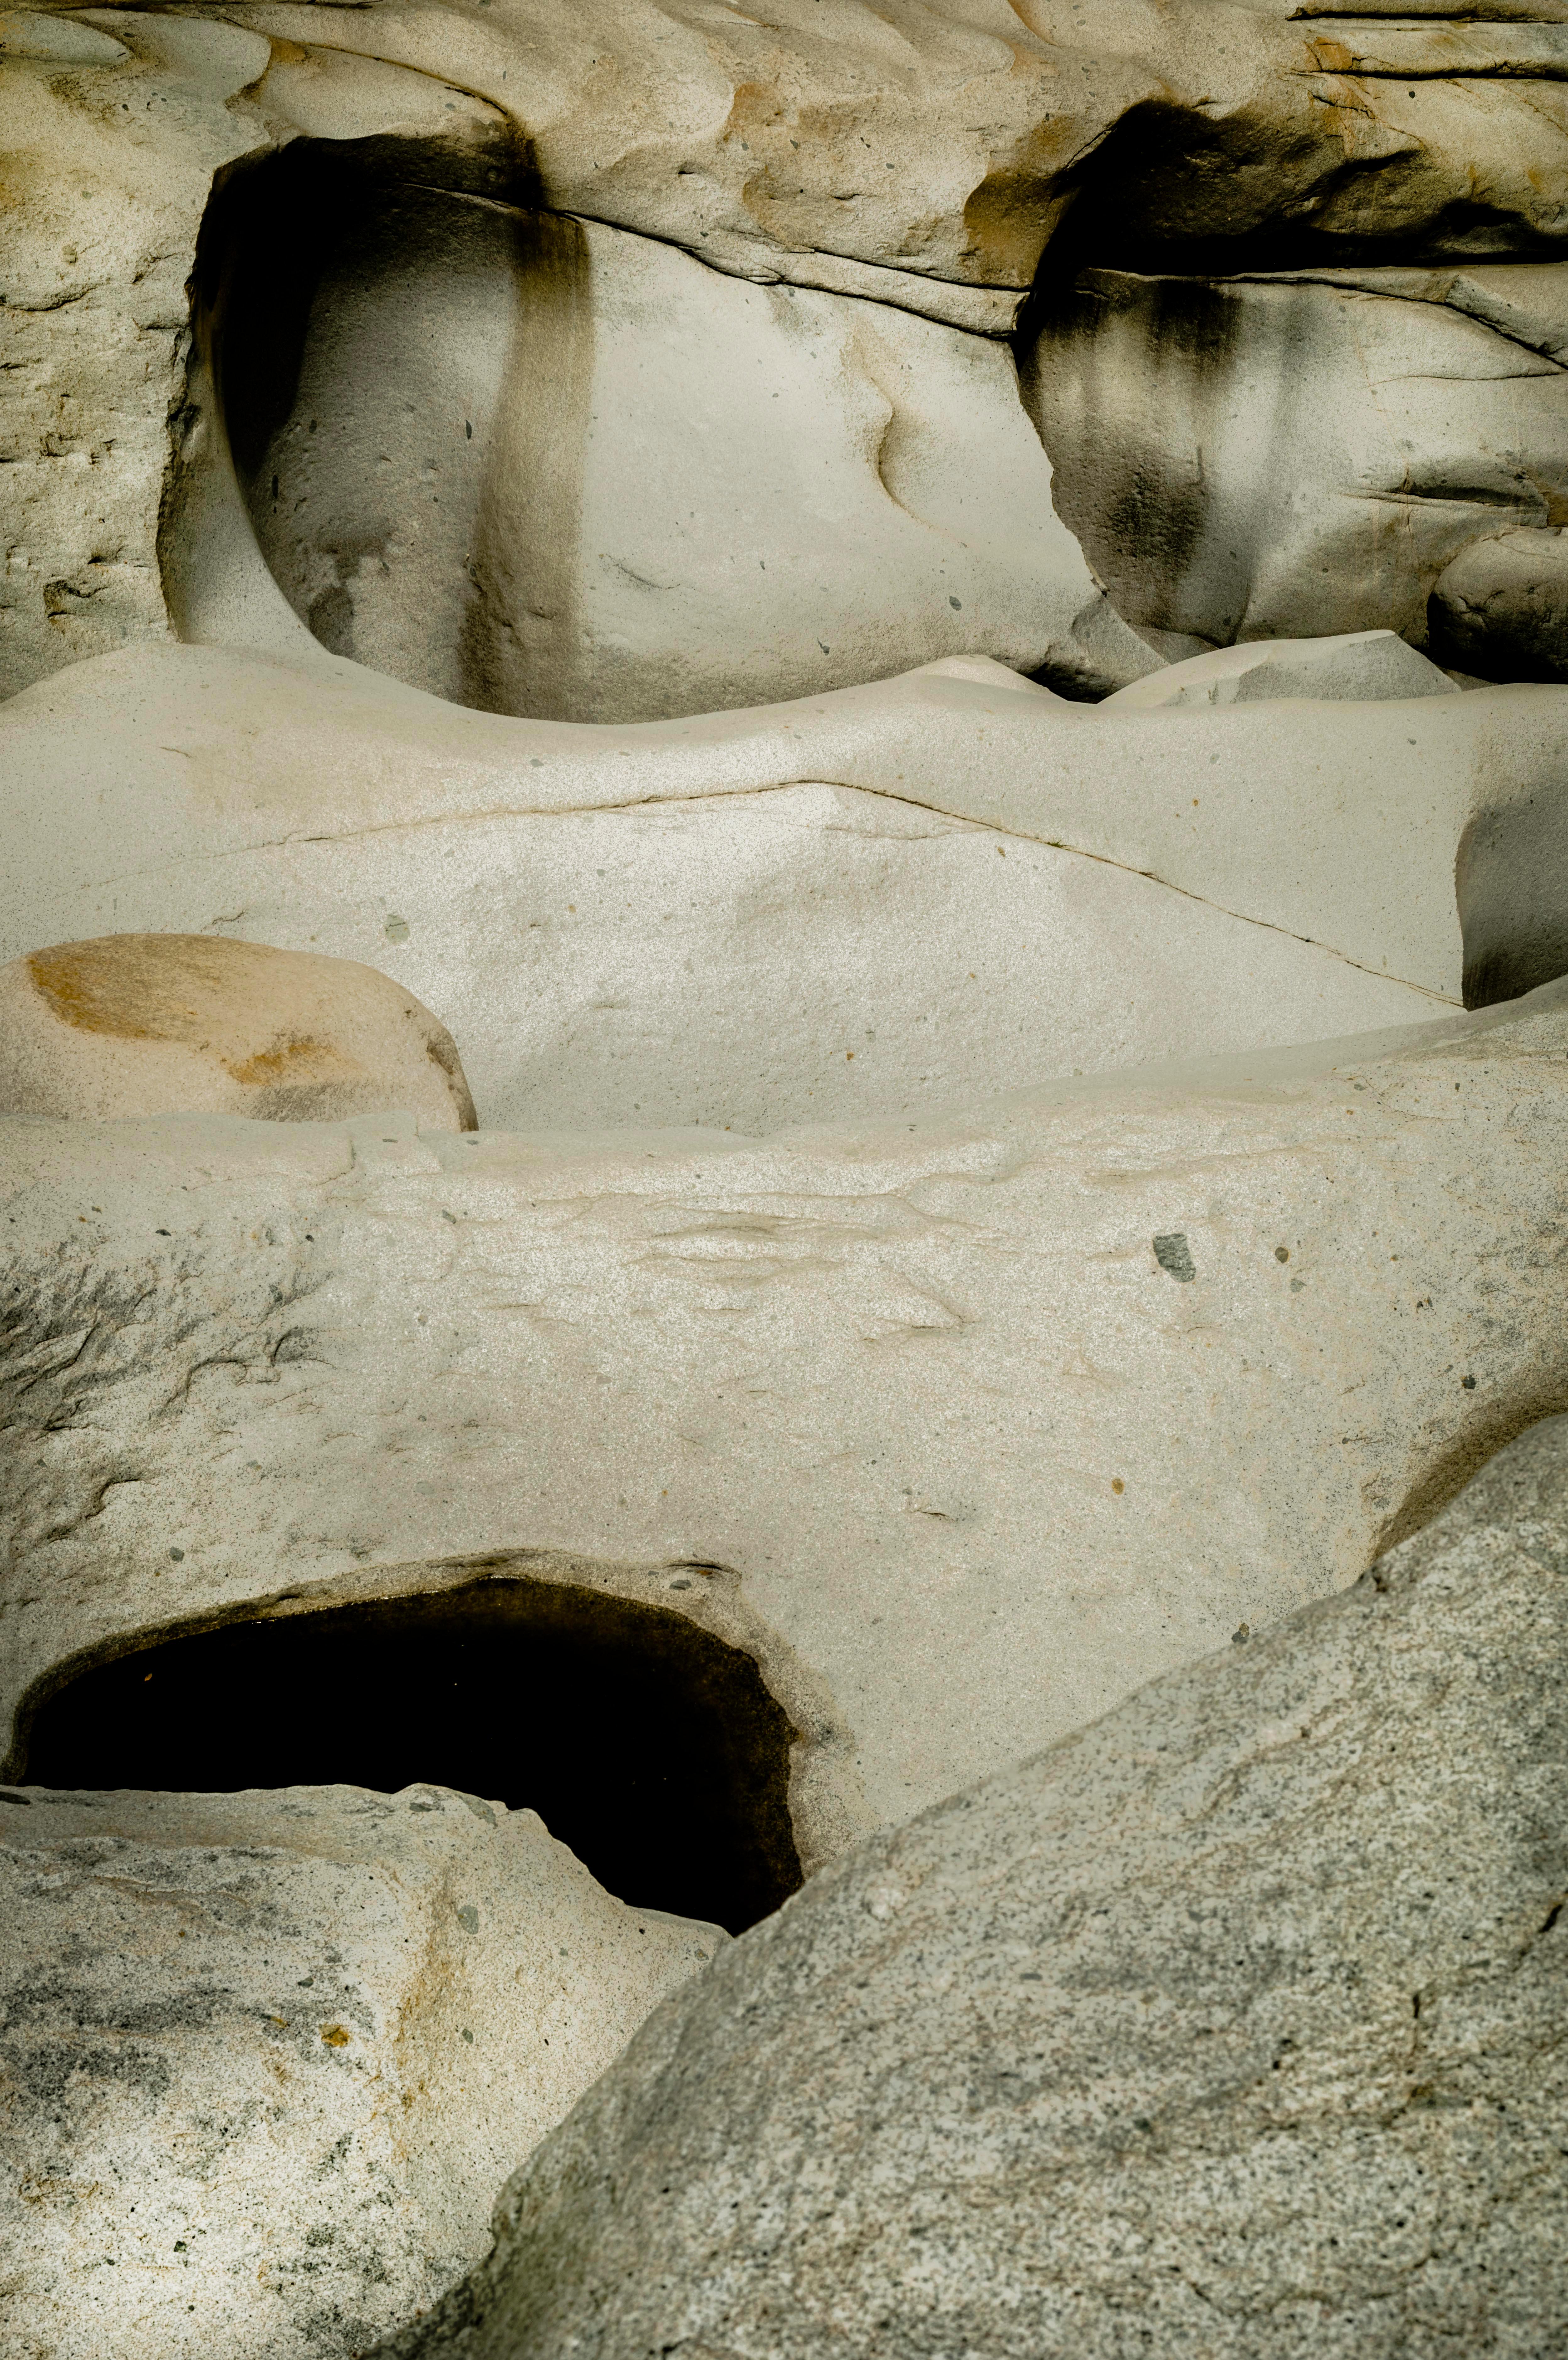 Mauricio Velez Landscape Photograph - Untitled I, Abstract rocks landscape color limited edition photograph 